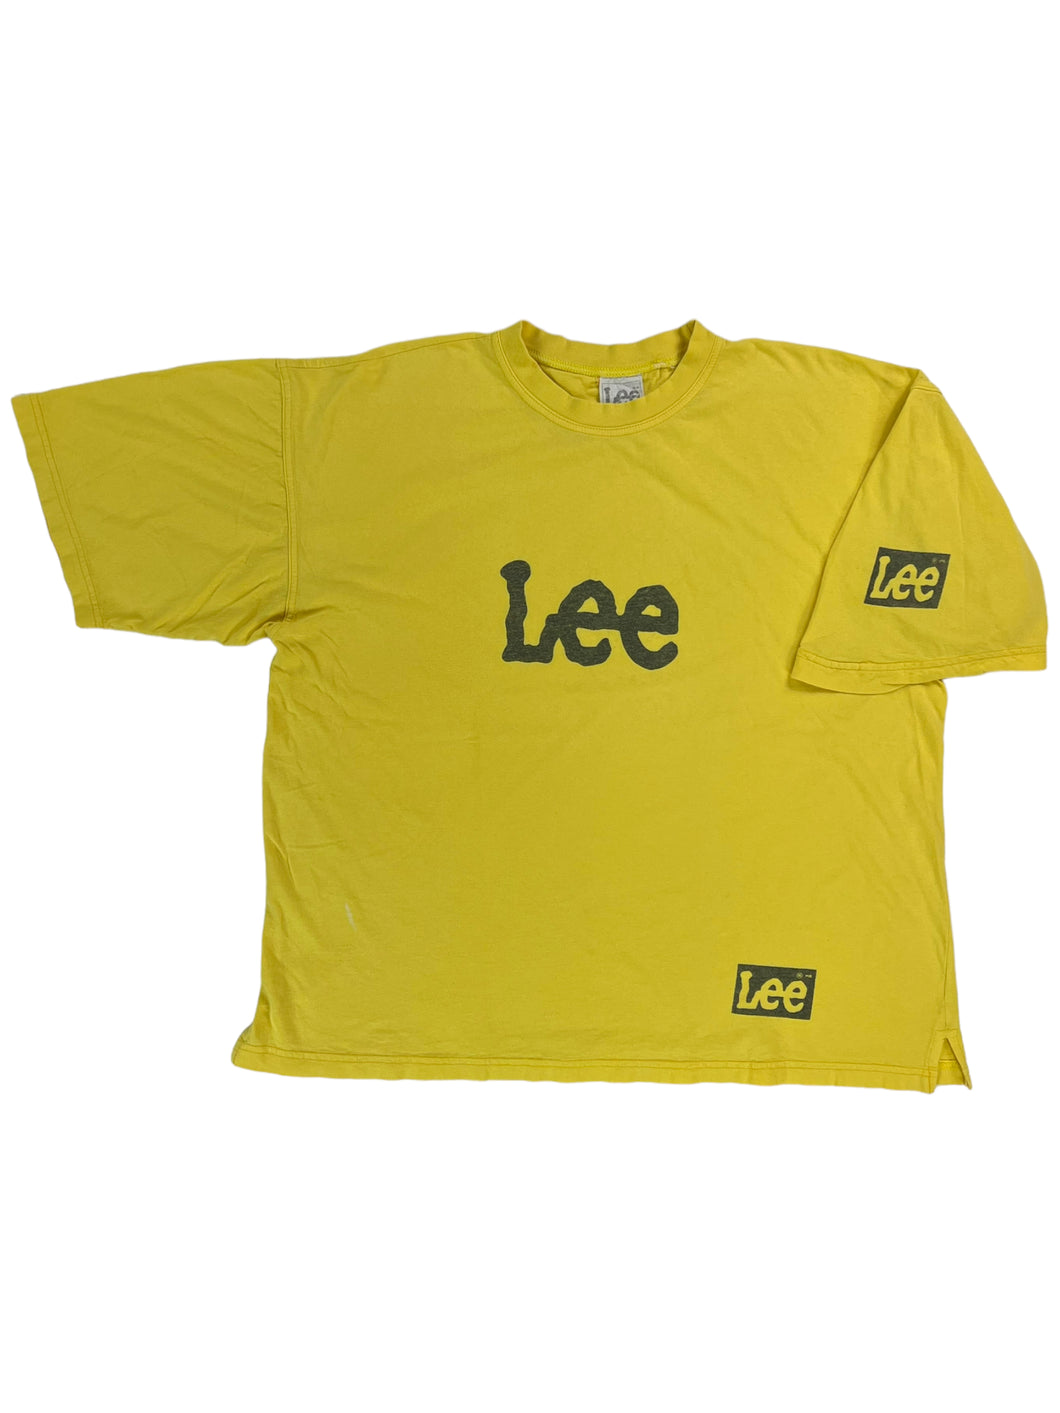 Vintage 90s Lee yellow logo shirt shirt tee (L/XL)